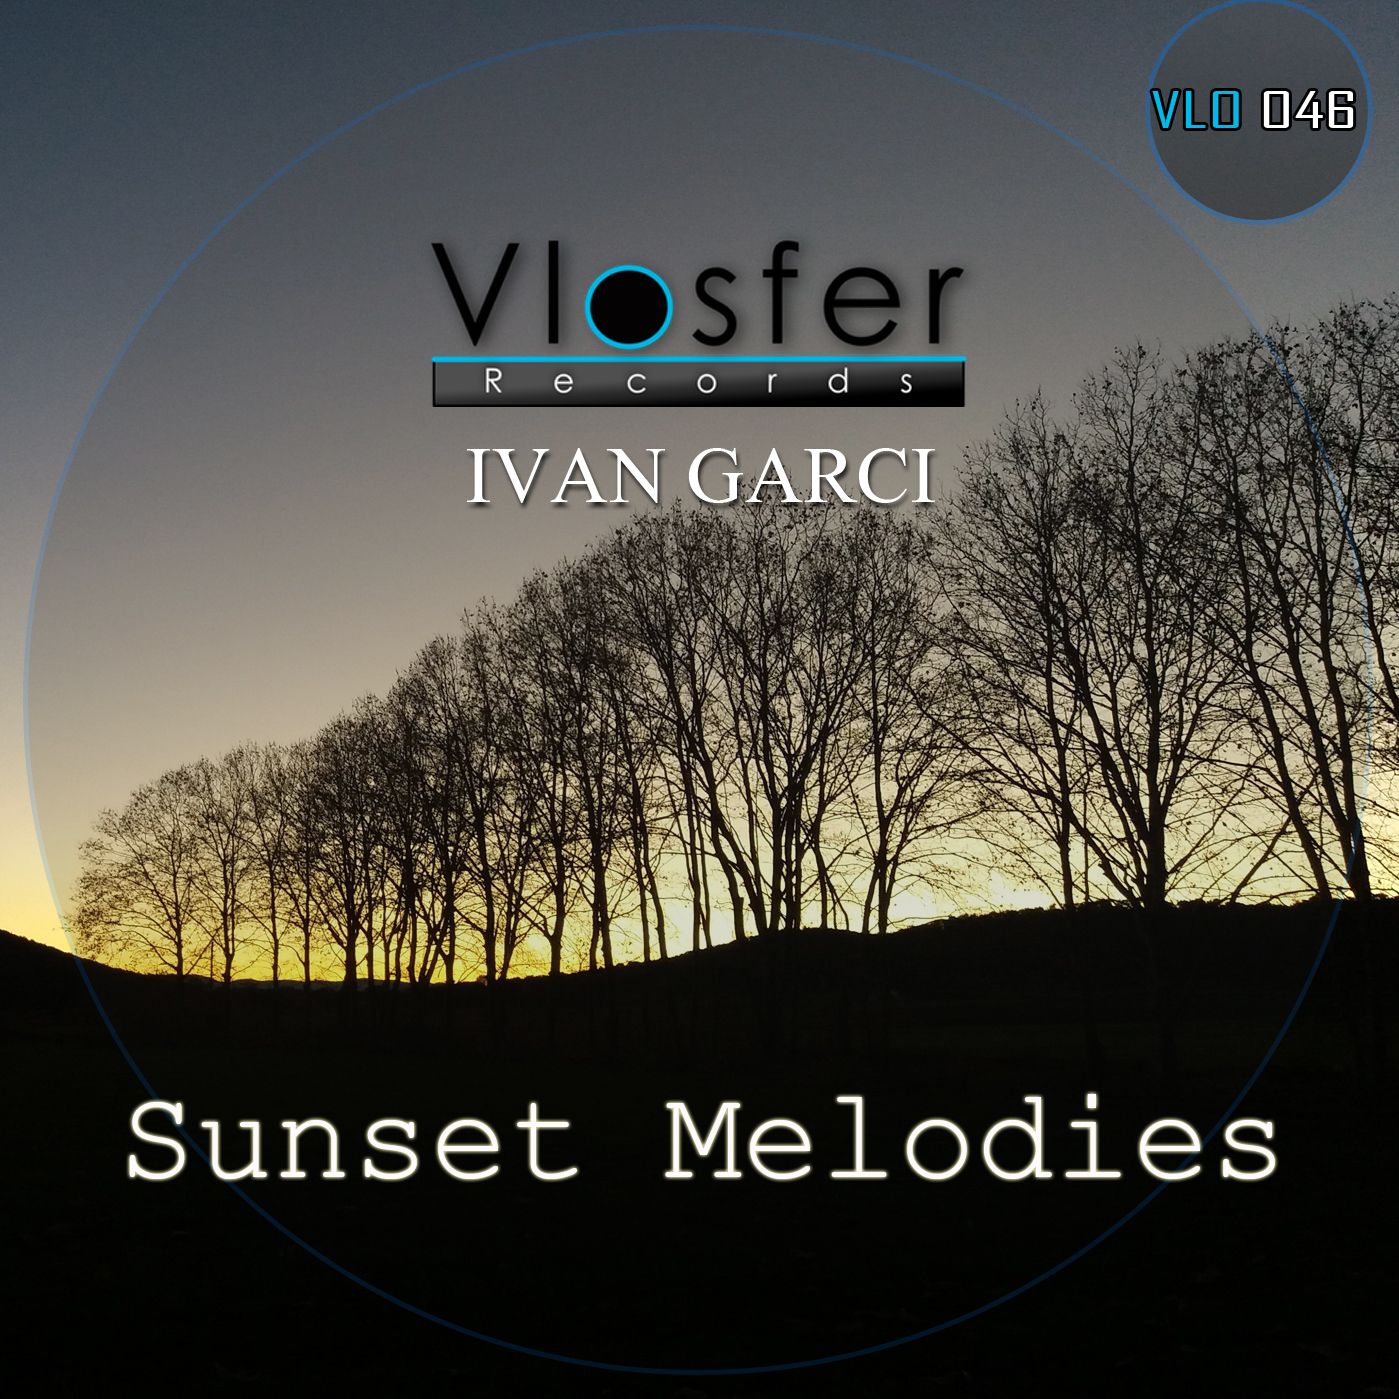 Descarregar Clear - Ivan Garci (low quality sound) Vlosfer records.